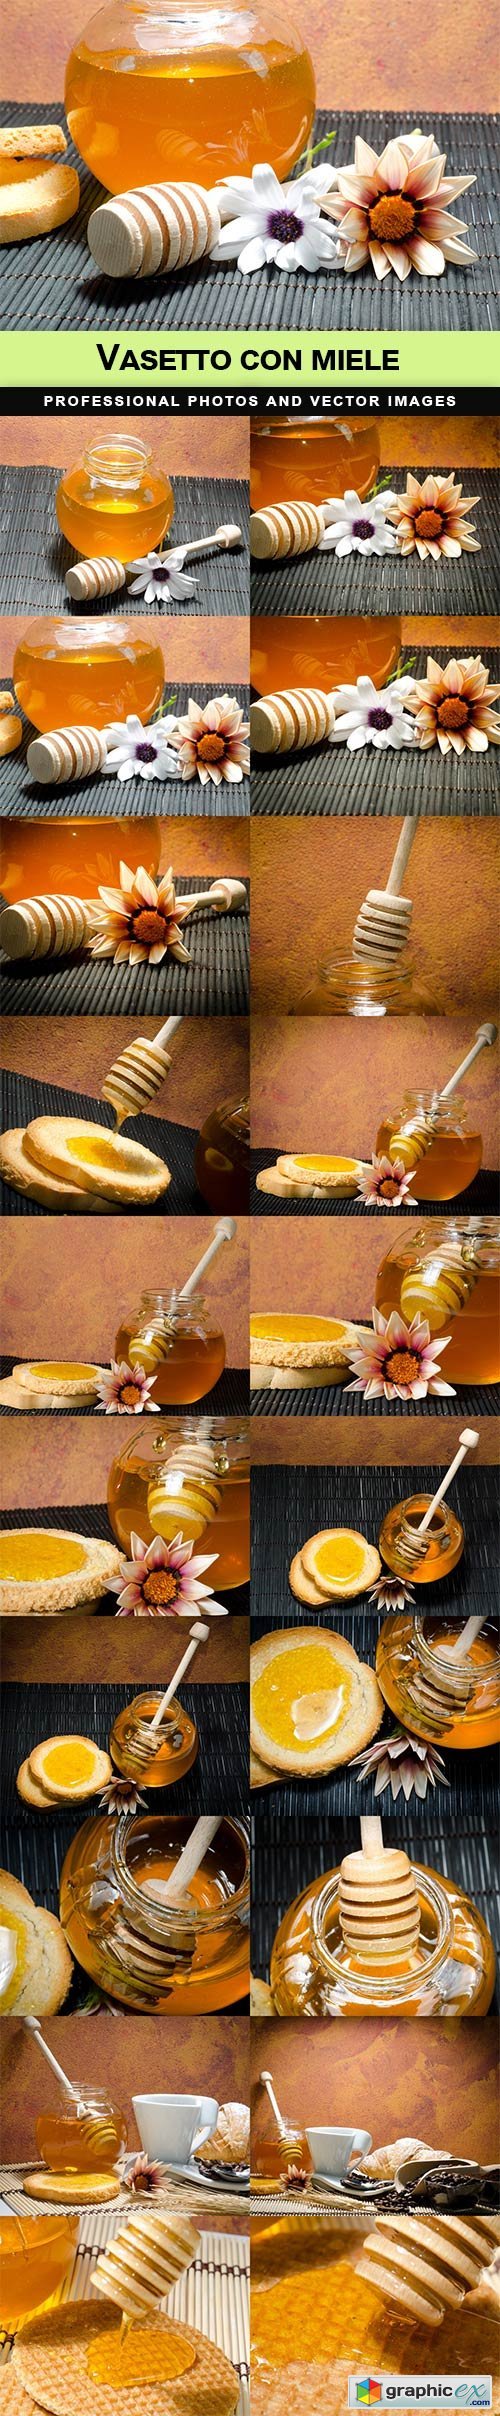  Vasetto con miele